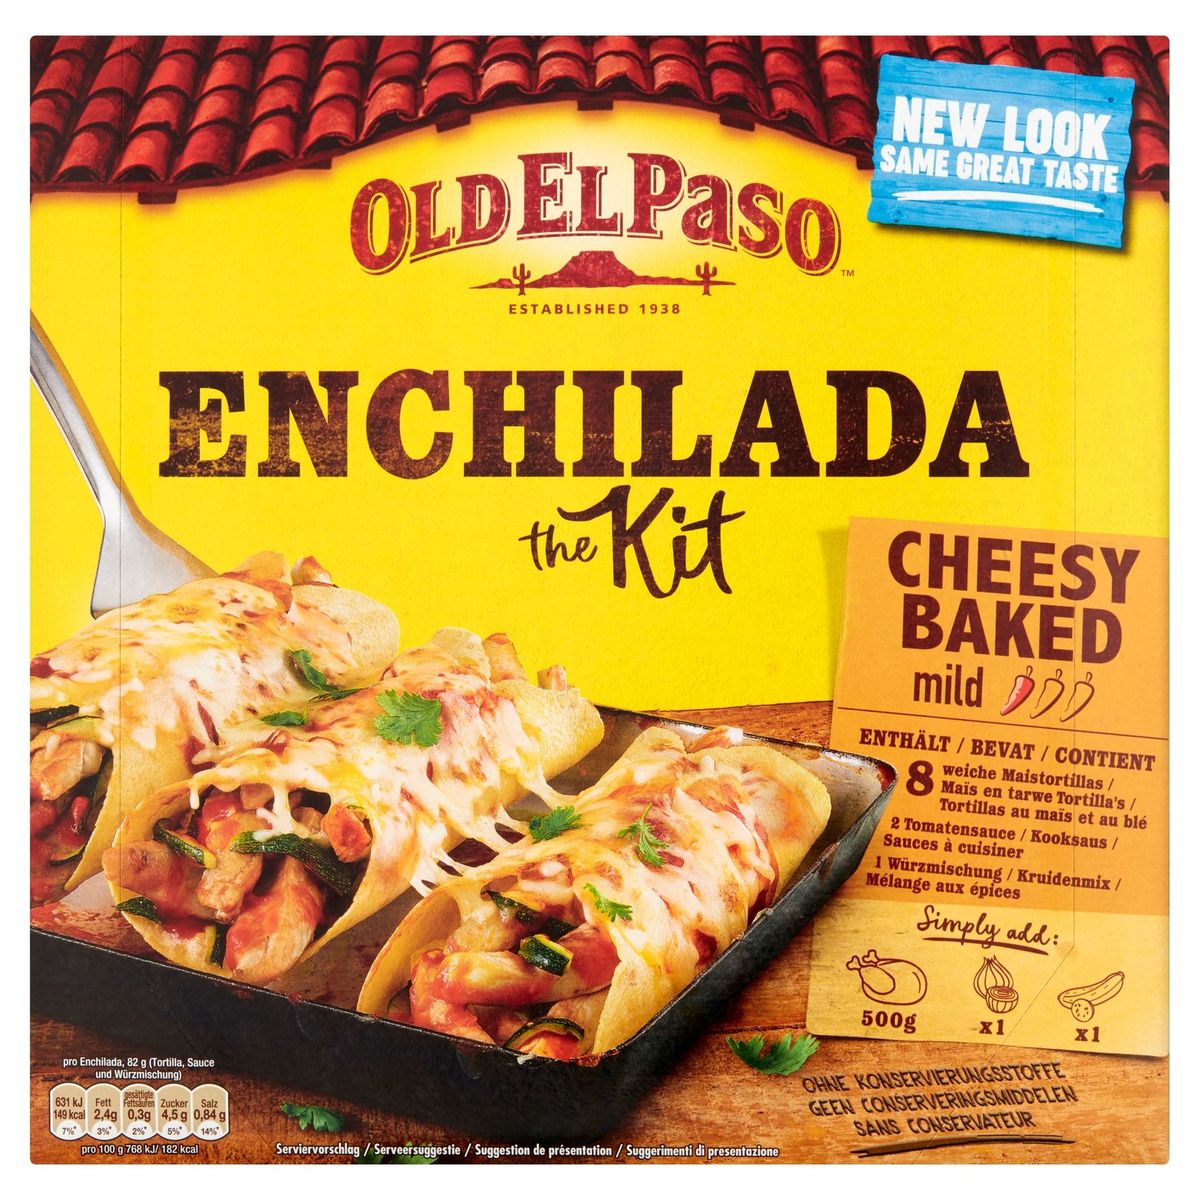 Old El Paso Enchilada the Kit Cheesy Baked 657 g